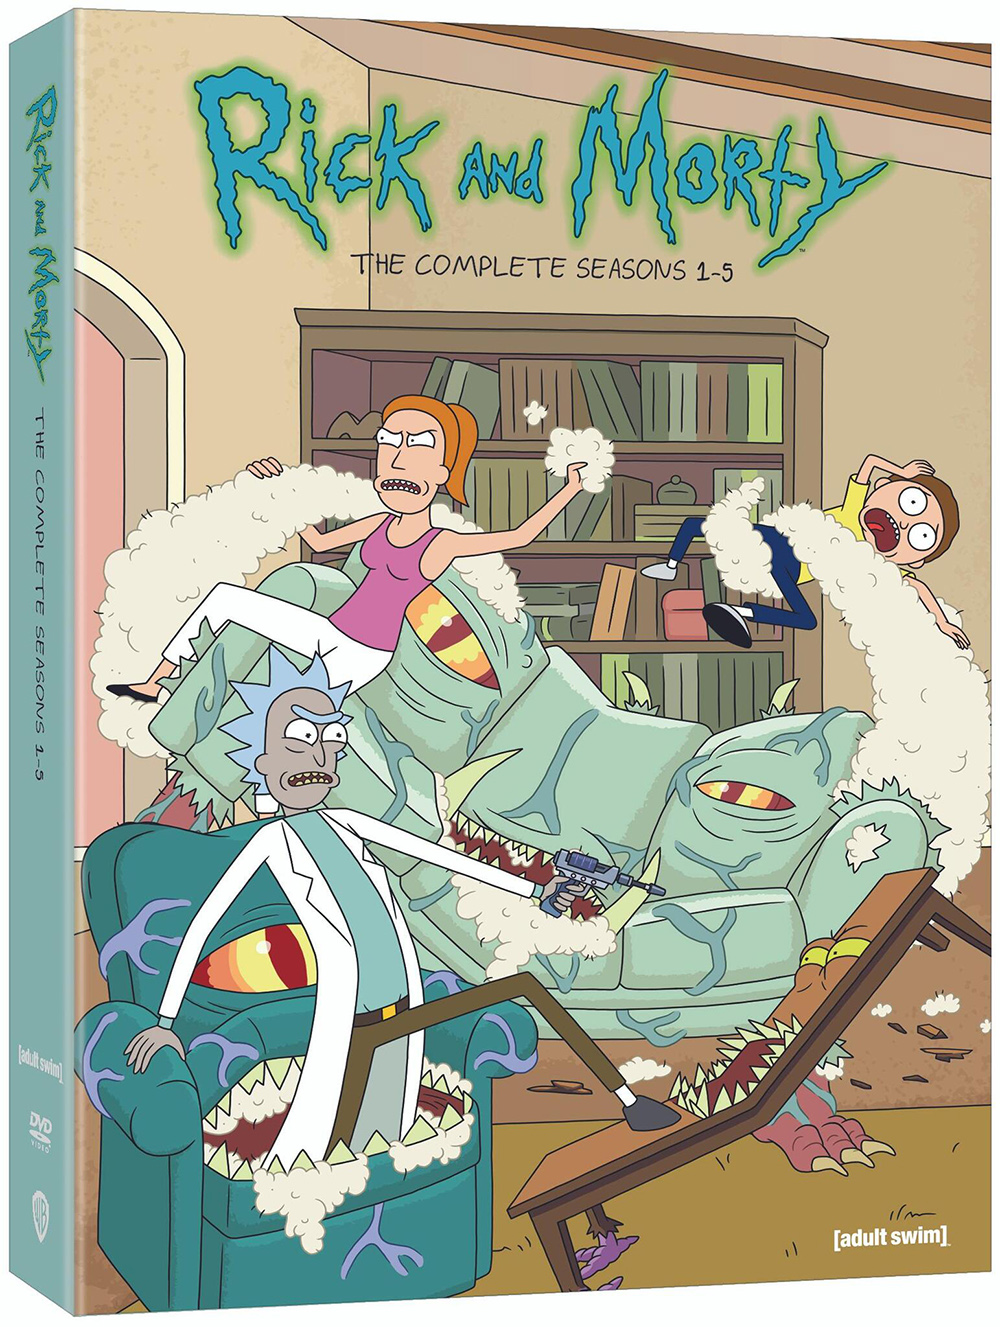  Rick and Morty: Seasons 1-5 Blu-ray Box Set